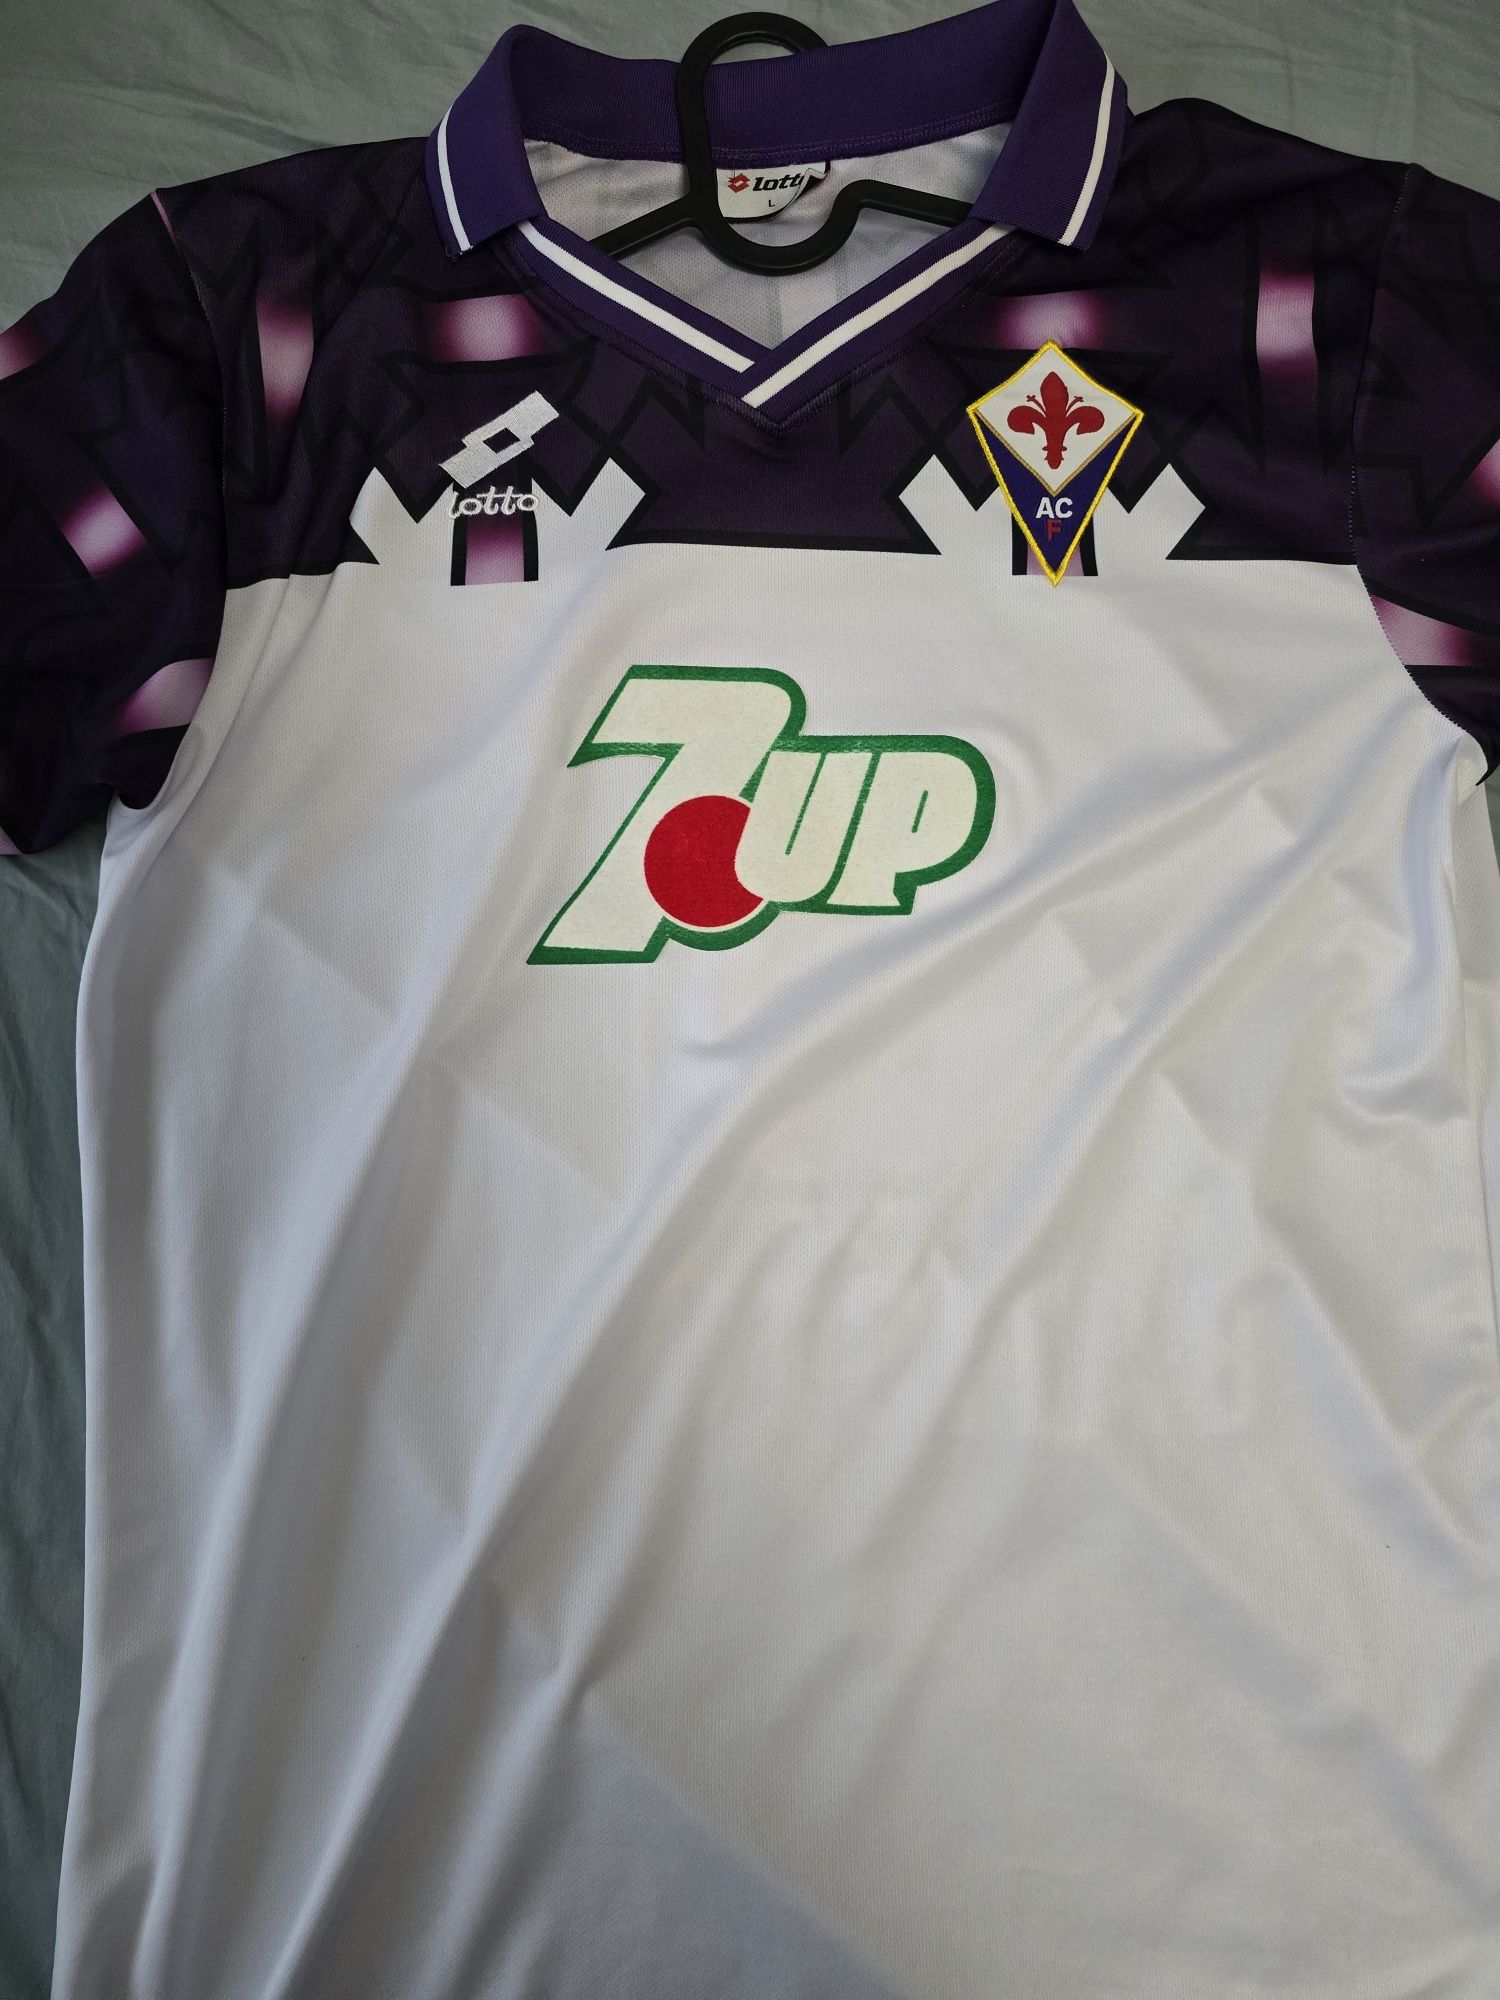 Tricou fotbal Lotto ACF Fiorentina #9 Batistuta